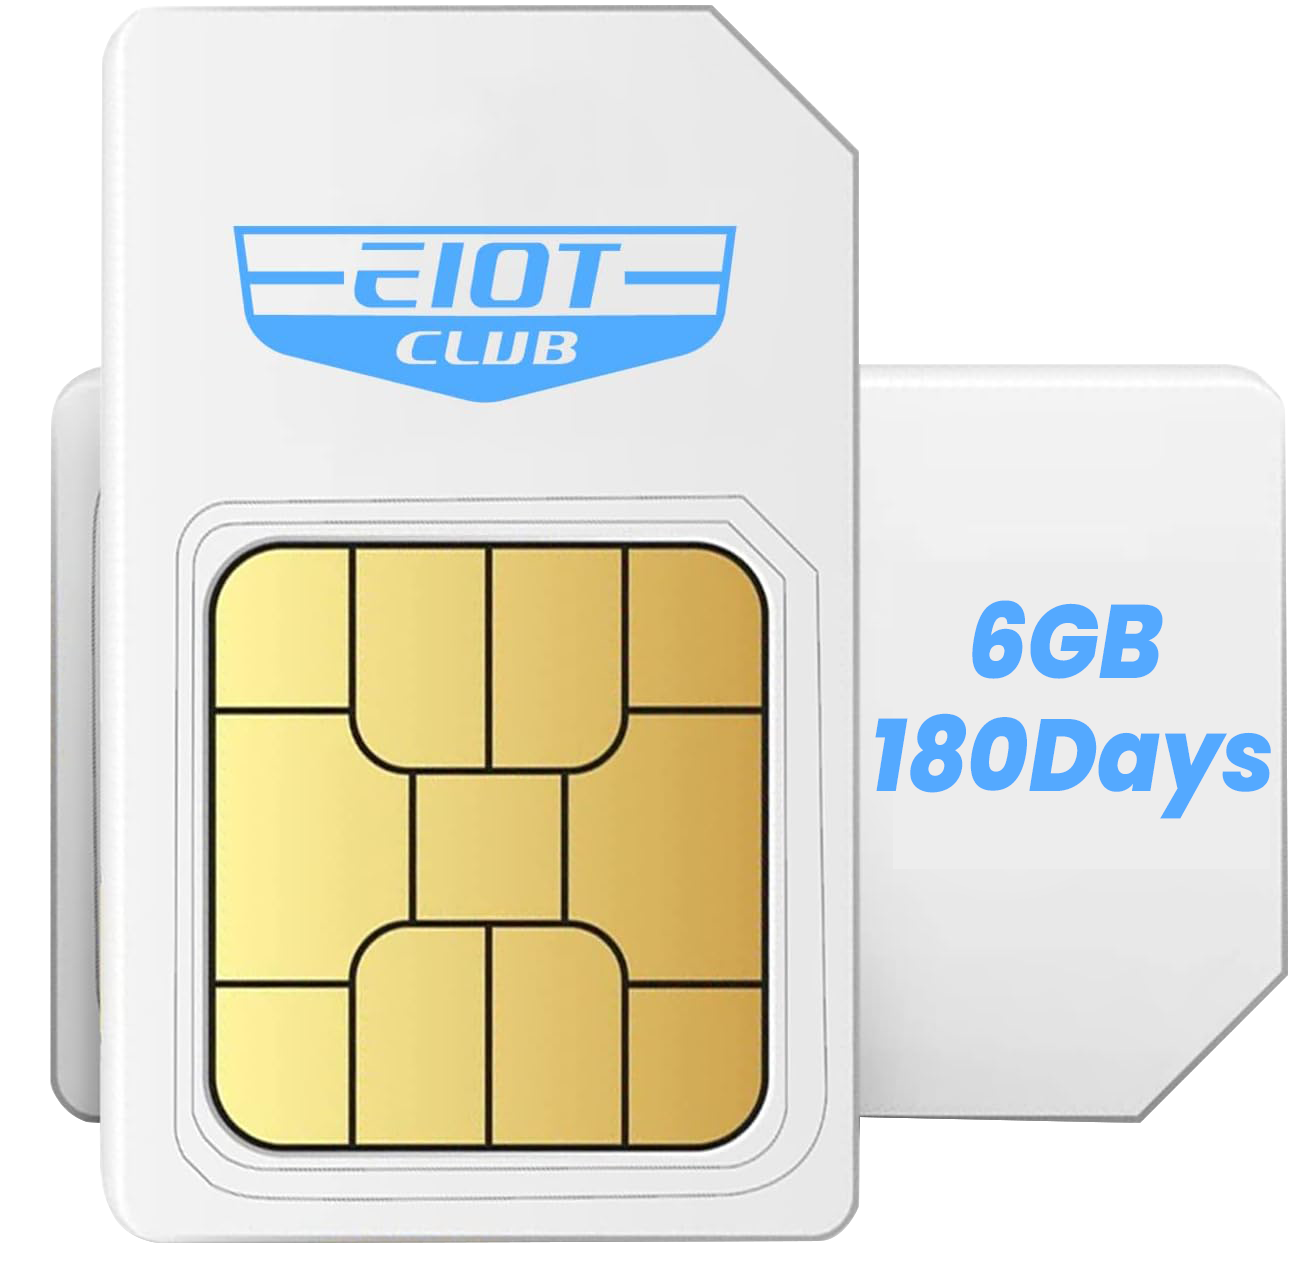 UBox EIOTCLUB SIM card data - 6 month 6GB